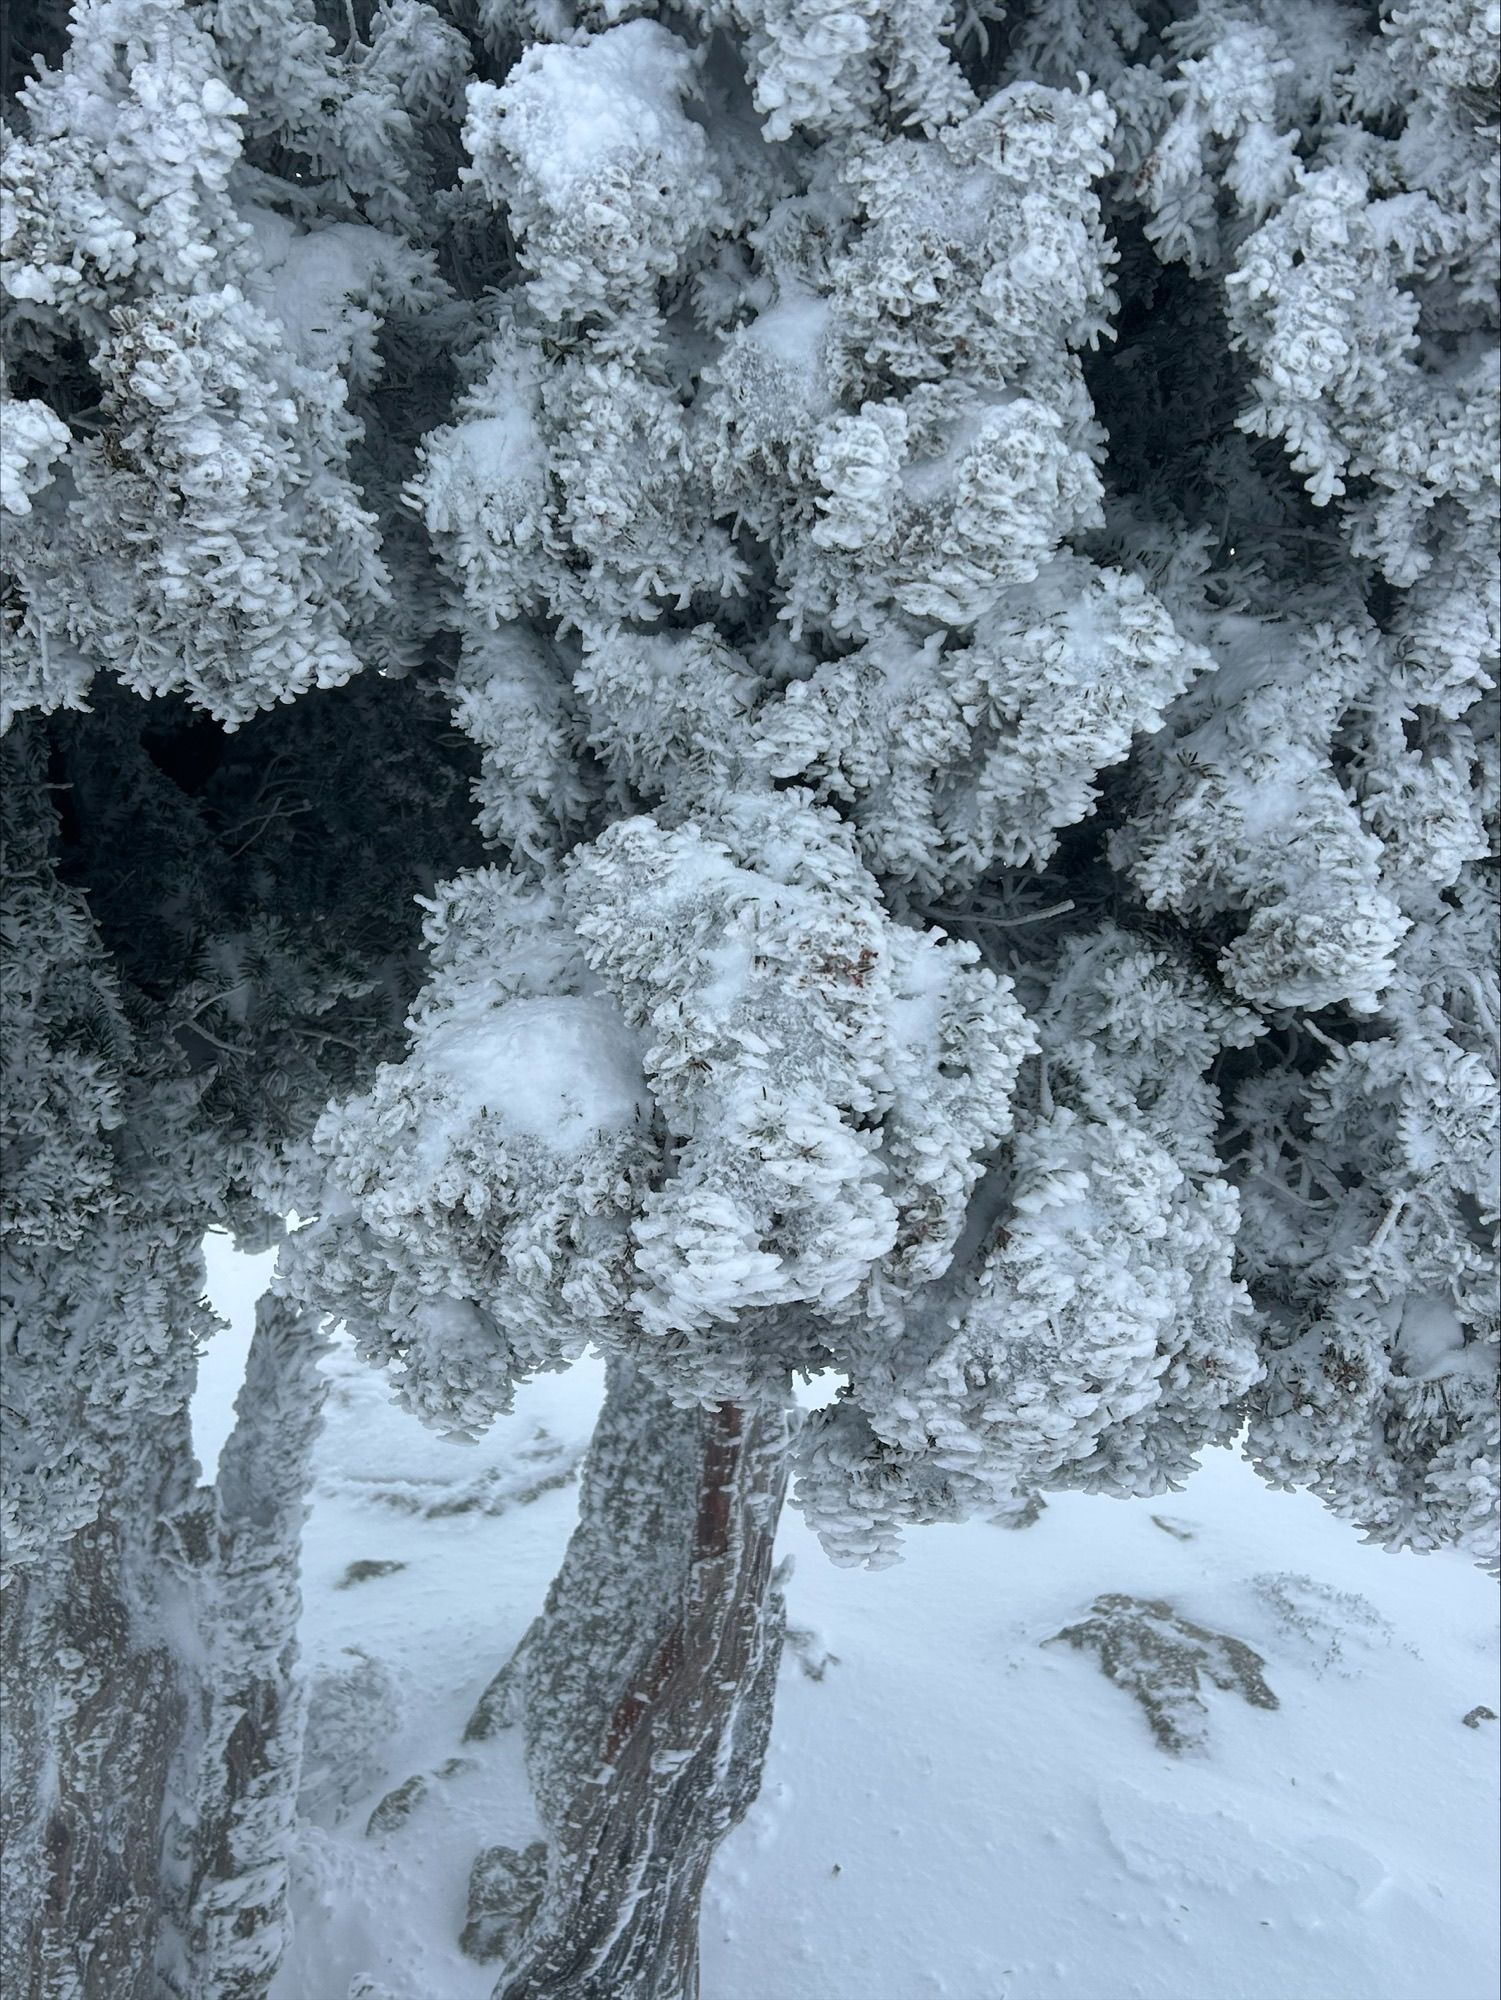 La Serra de Tramuntana, como una pista de esquí